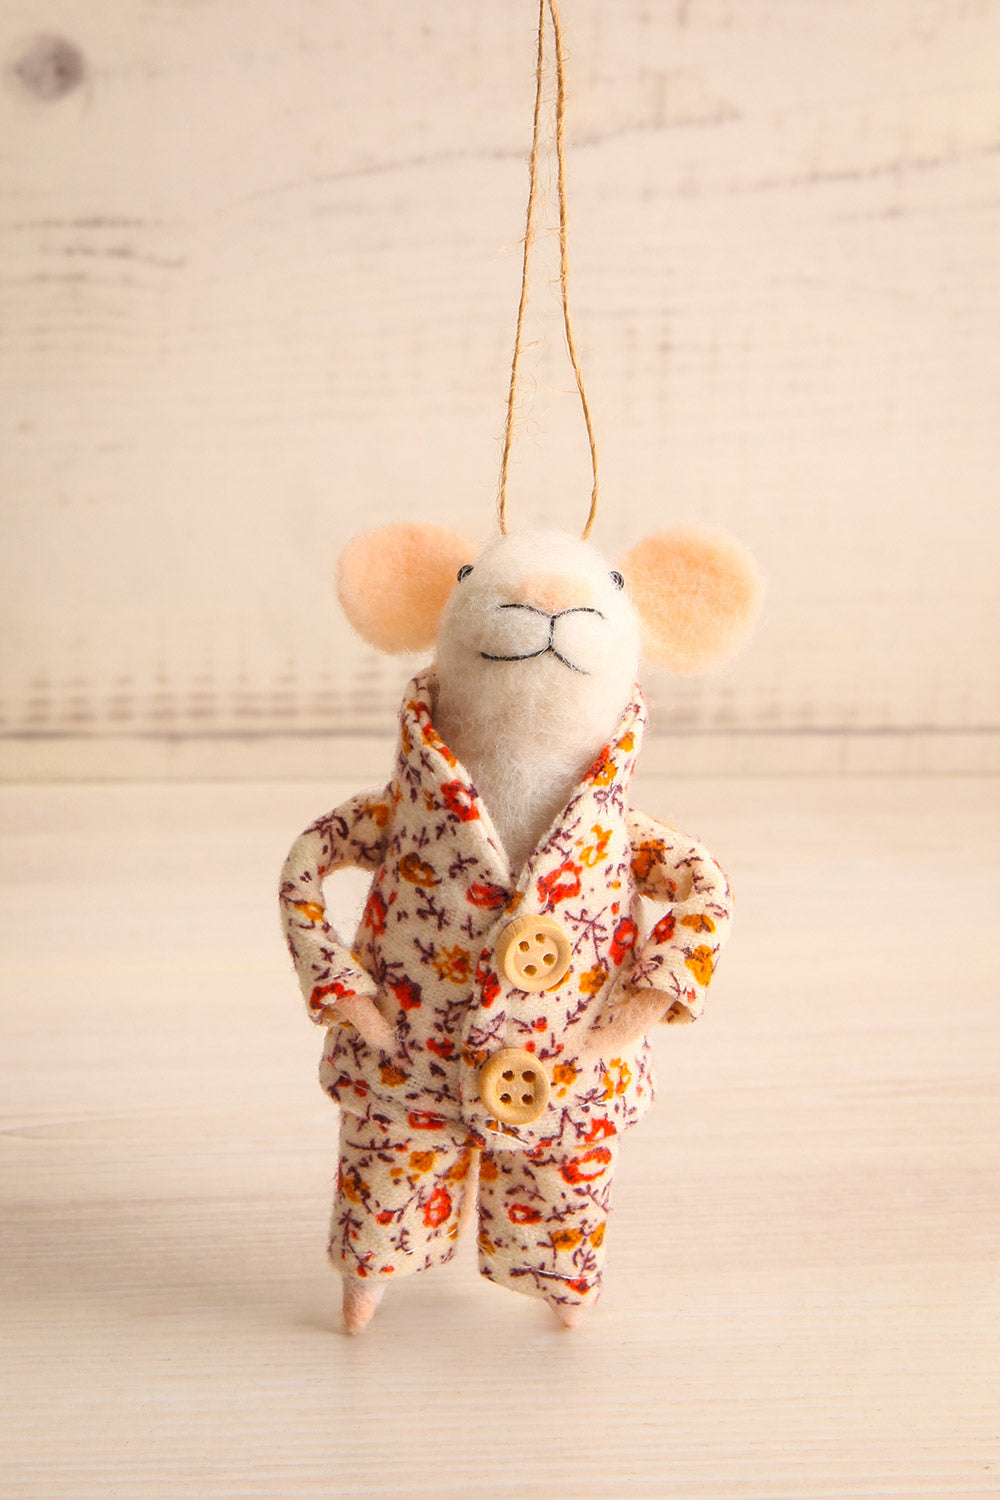 Pyjama Mouse Holiday Ornament | Maison garçonne paul